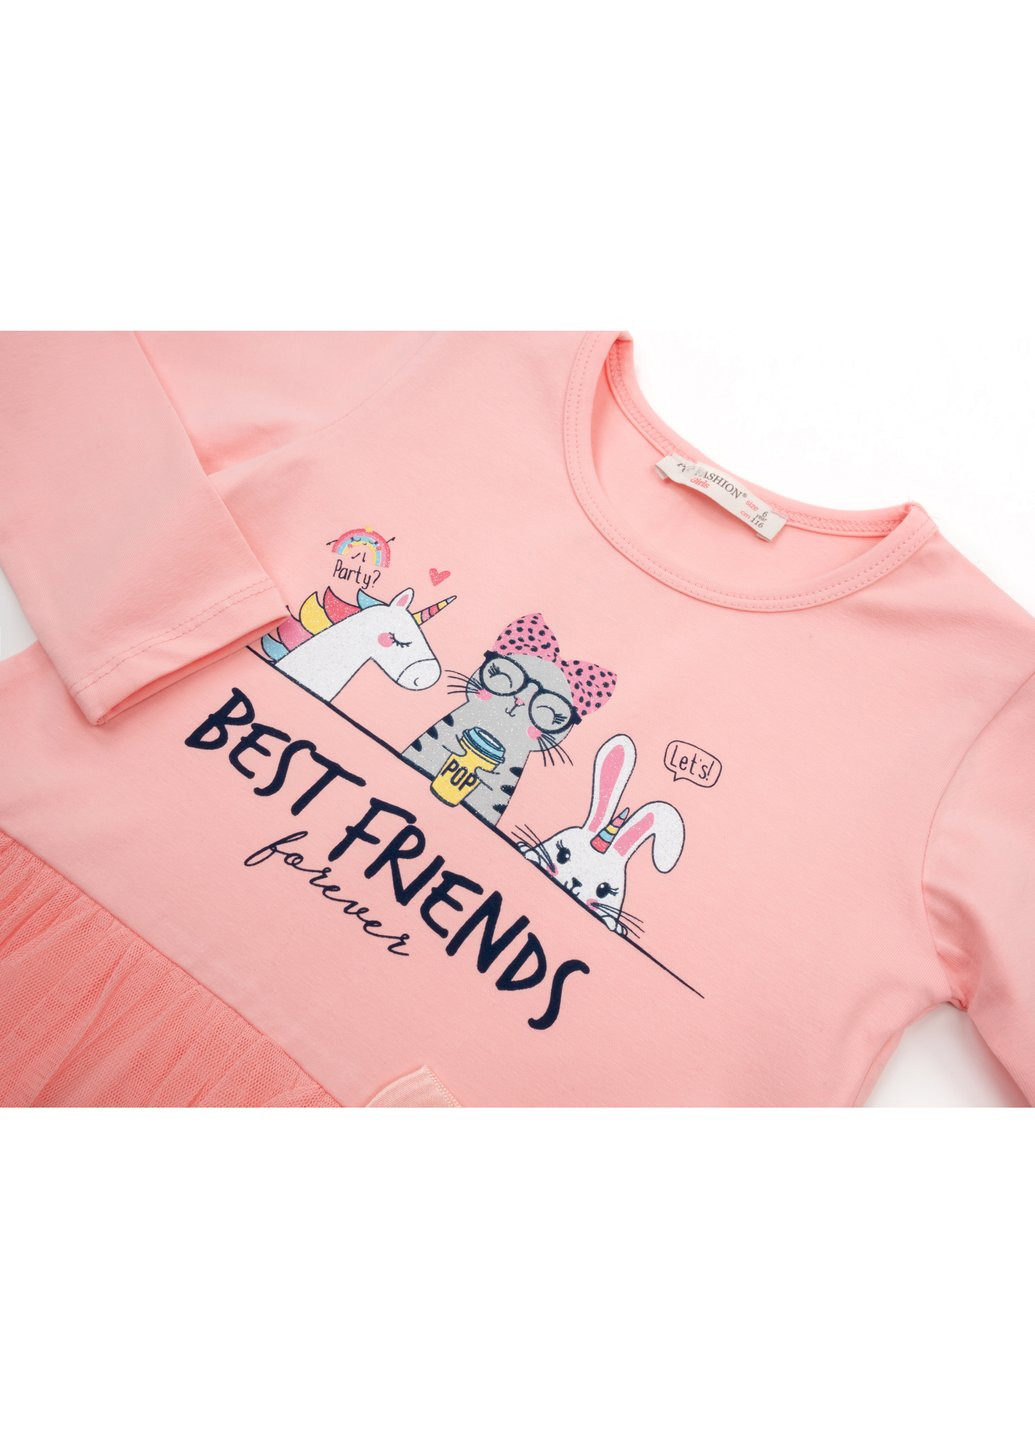 Персикова сукня "best friends" (6796-128g-peach) Pop Fashion (257142363)